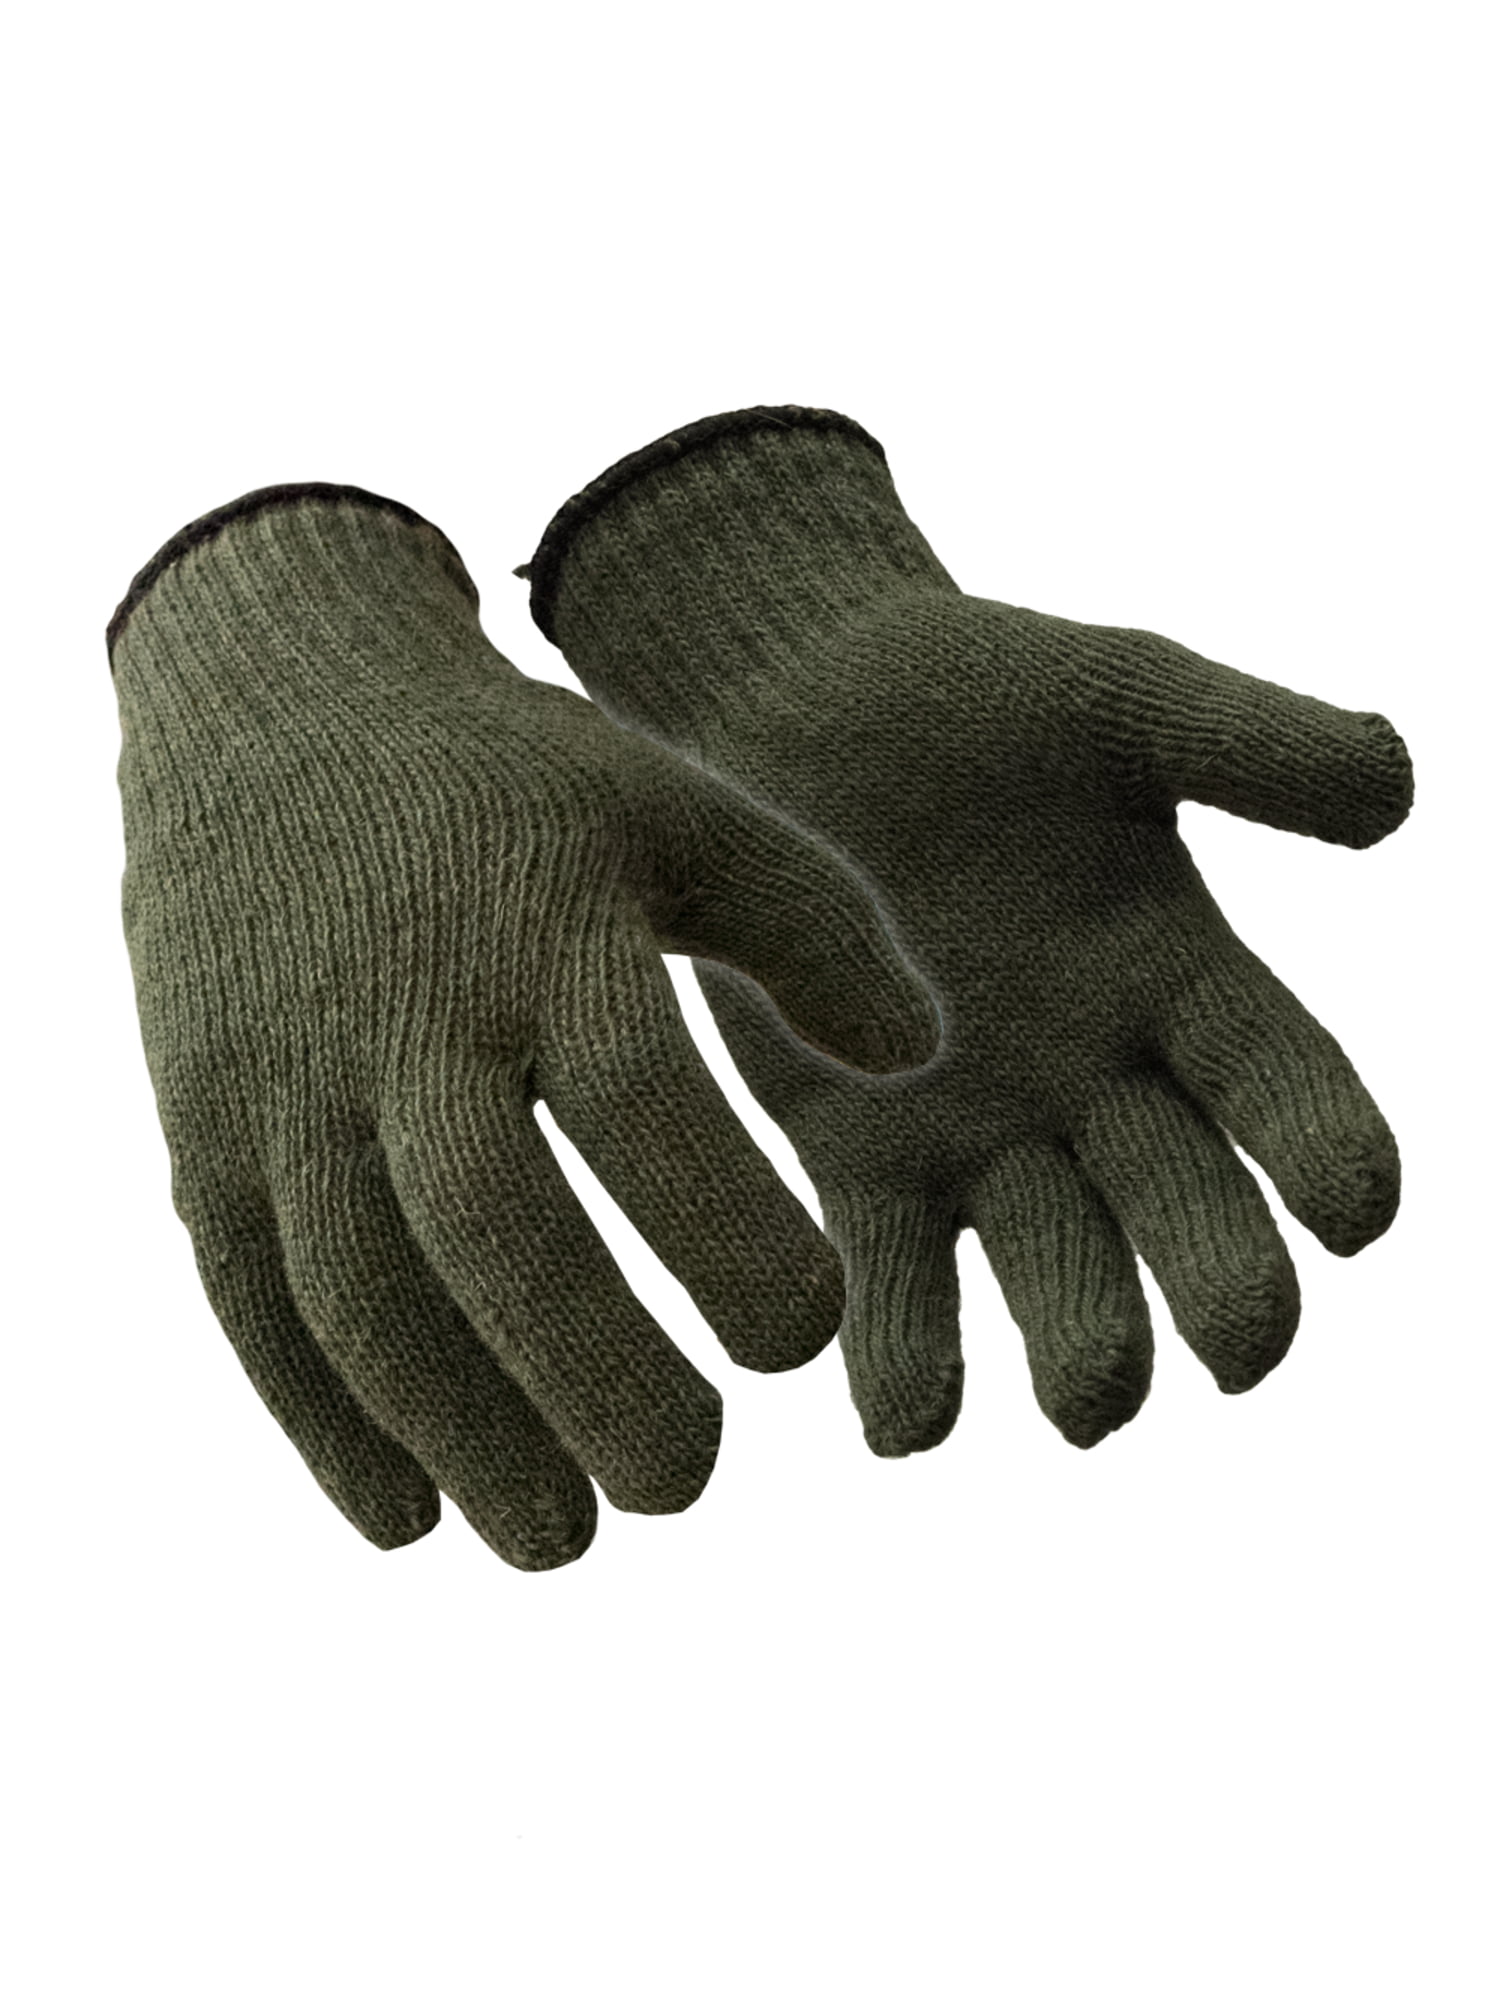 USGI Cold Weather Glove Wool Inserts X-Large Type II Class 4 Black 100% Wool 